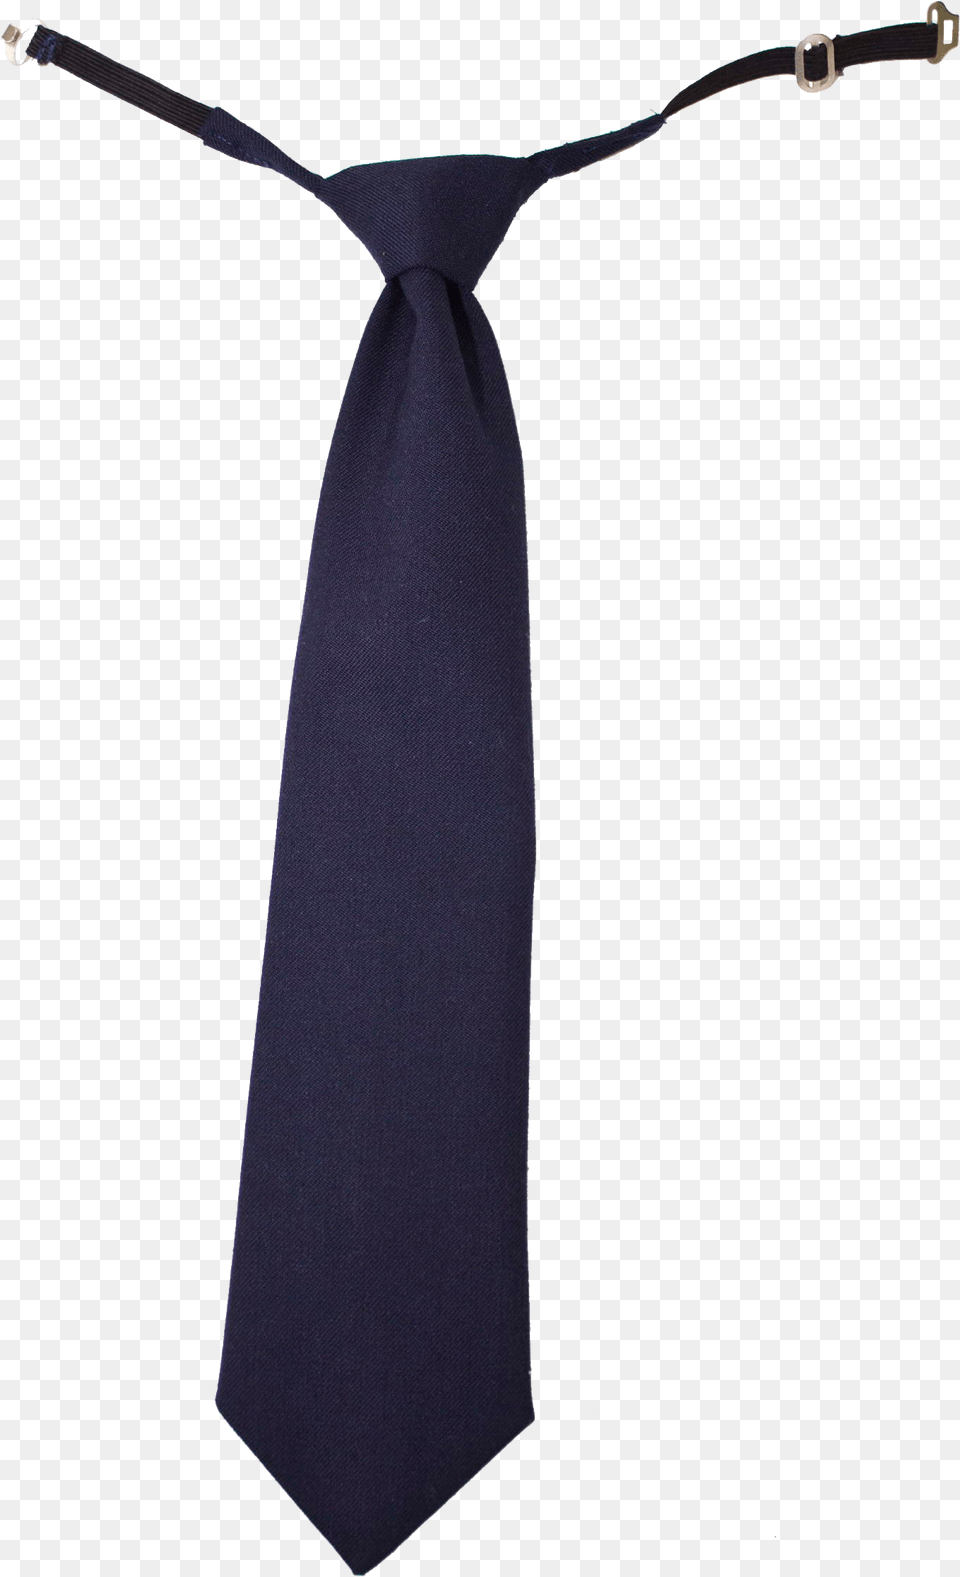 Tie Transparent All Kinds Of Tie, Accessories, Formal Wear, Necktie, Blade Png Image